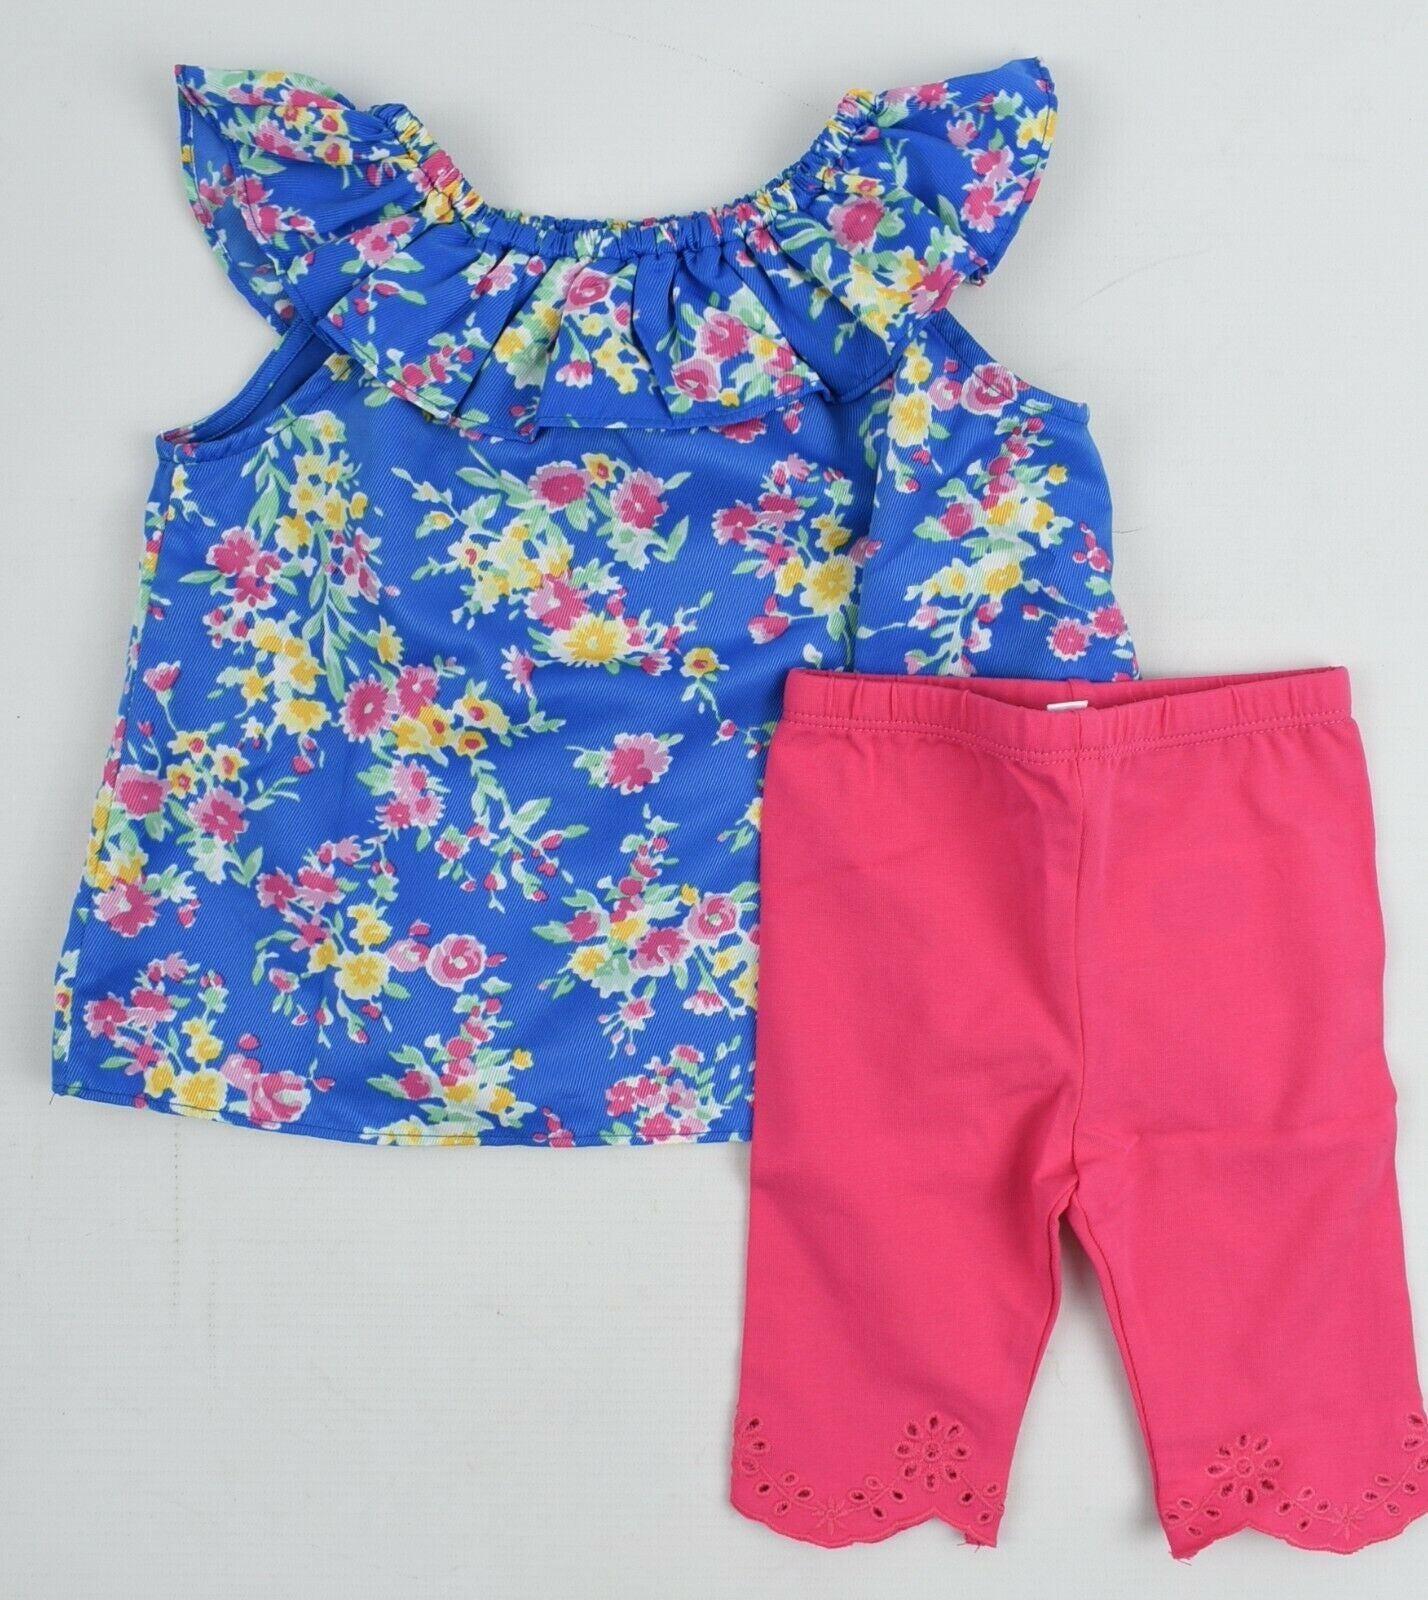 RALPH LAUREN Baby Girls' 2-pc Outfit Set, Top+Leggings, Blue/Pink, size 9 months